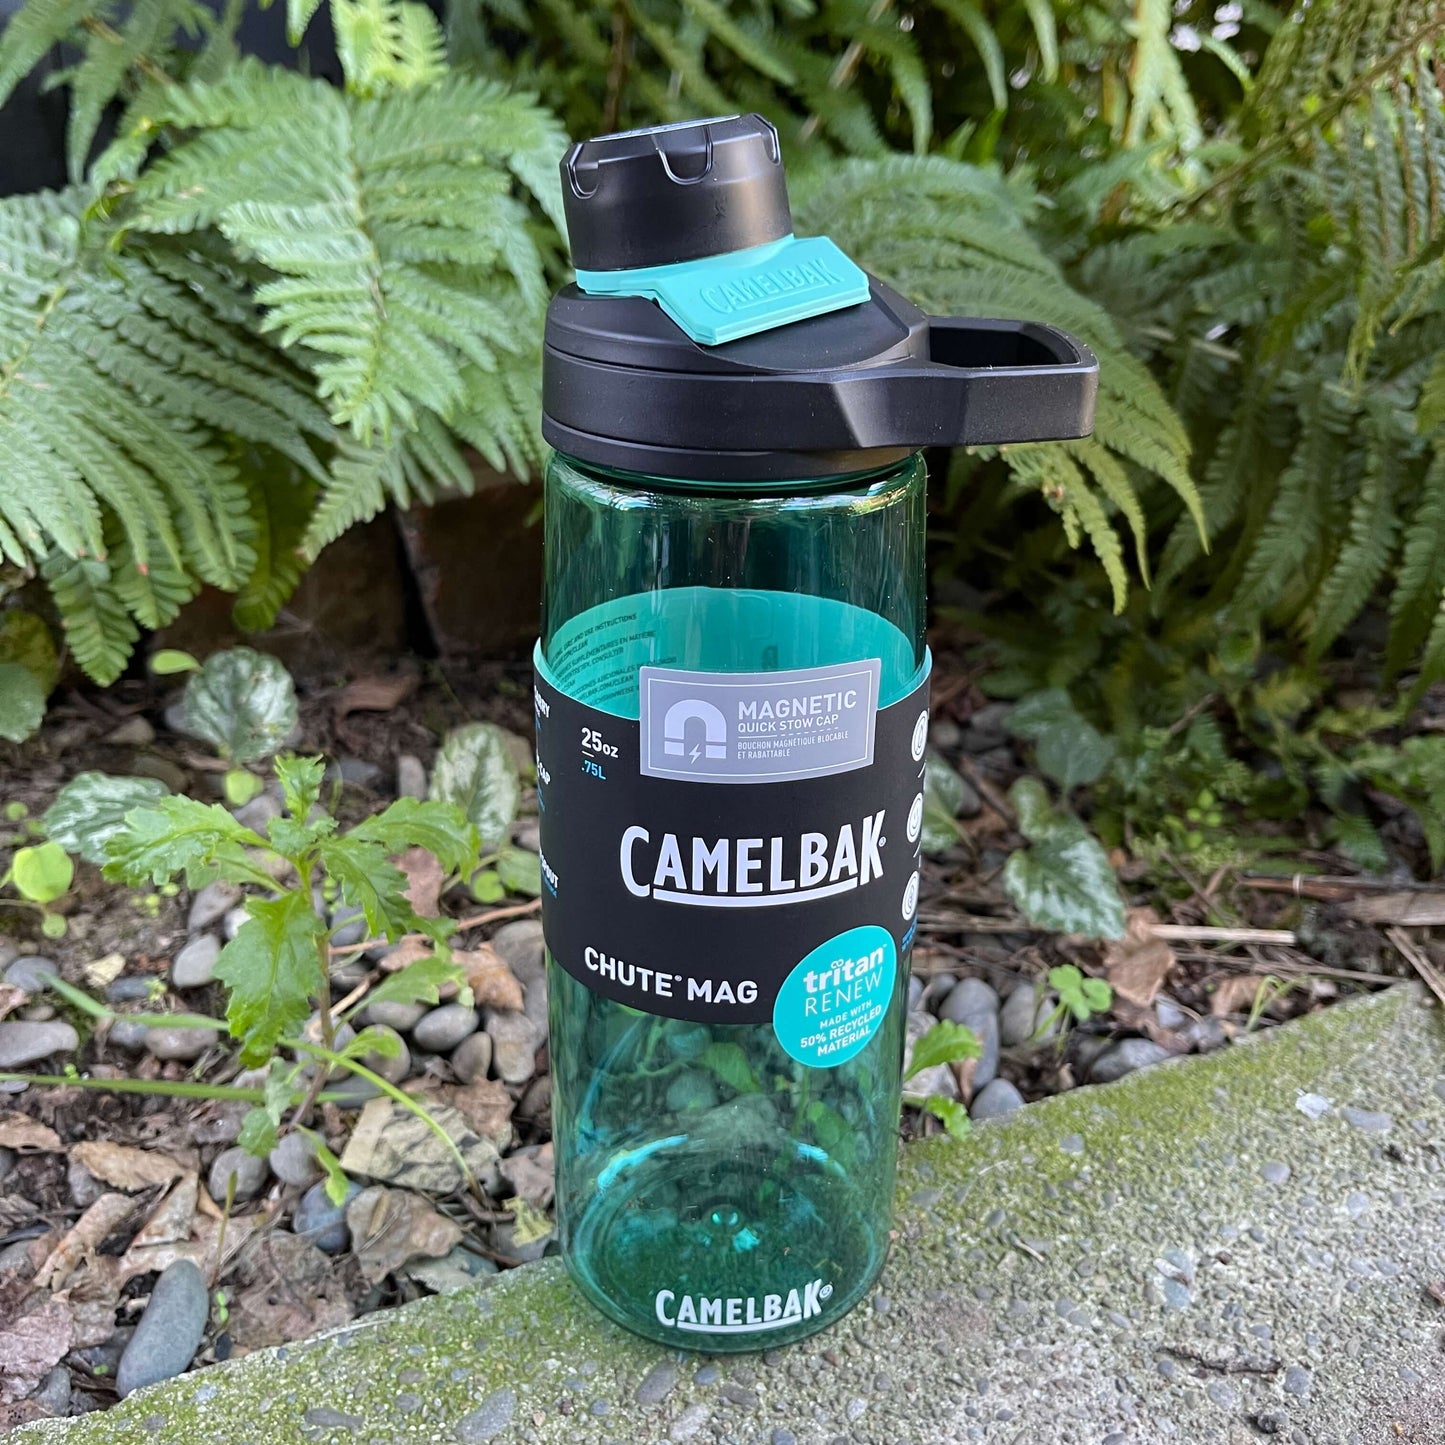 Camelbak chute mag drink bottle in coastal green.